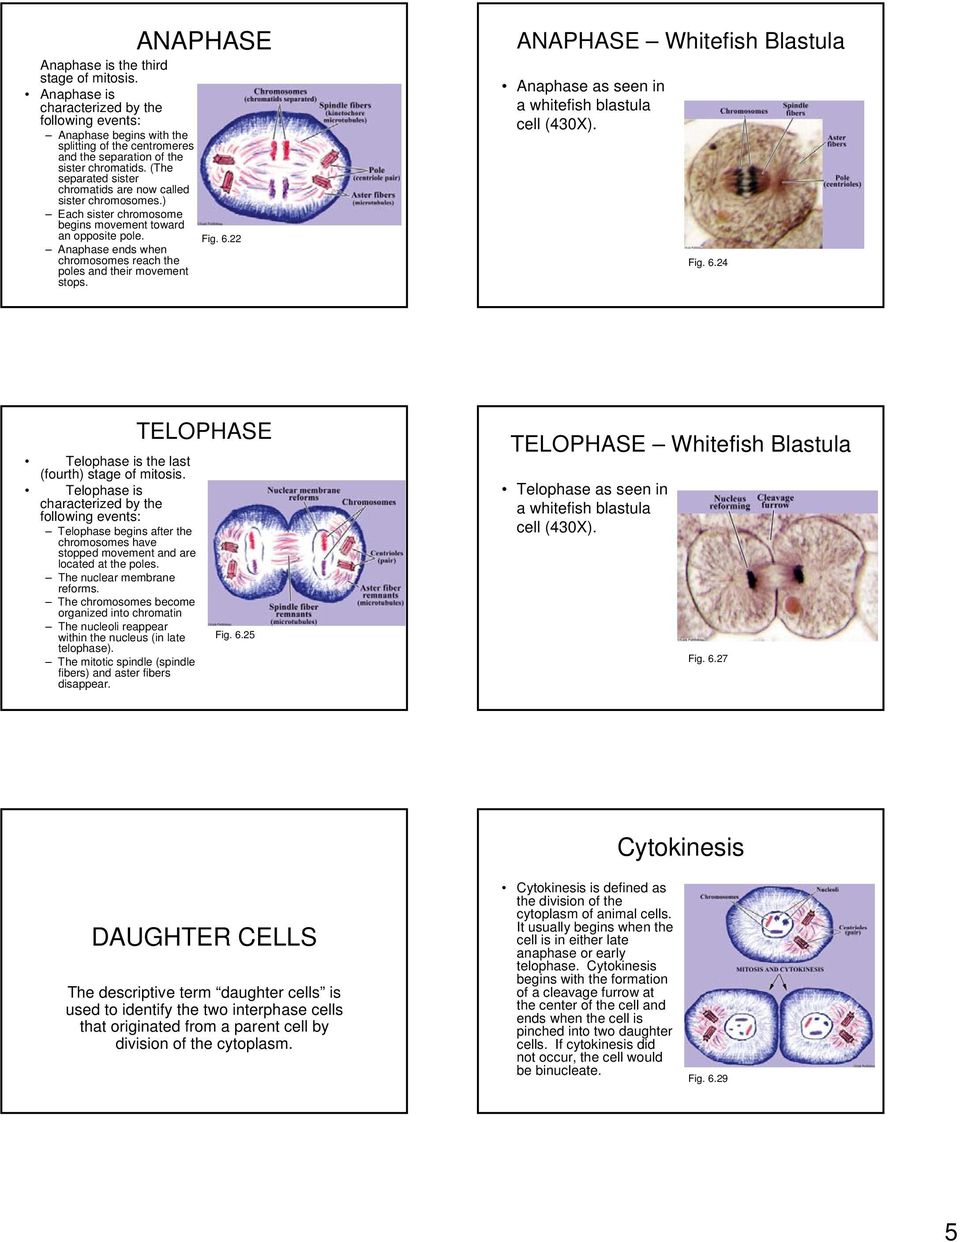 6.22 ANAPHASE Whitefish Blastula Anaphase as seen in a whitefish blastula cell (430X). Fig. 6.24 Telophase is the last (fourth) stage of mitosis.